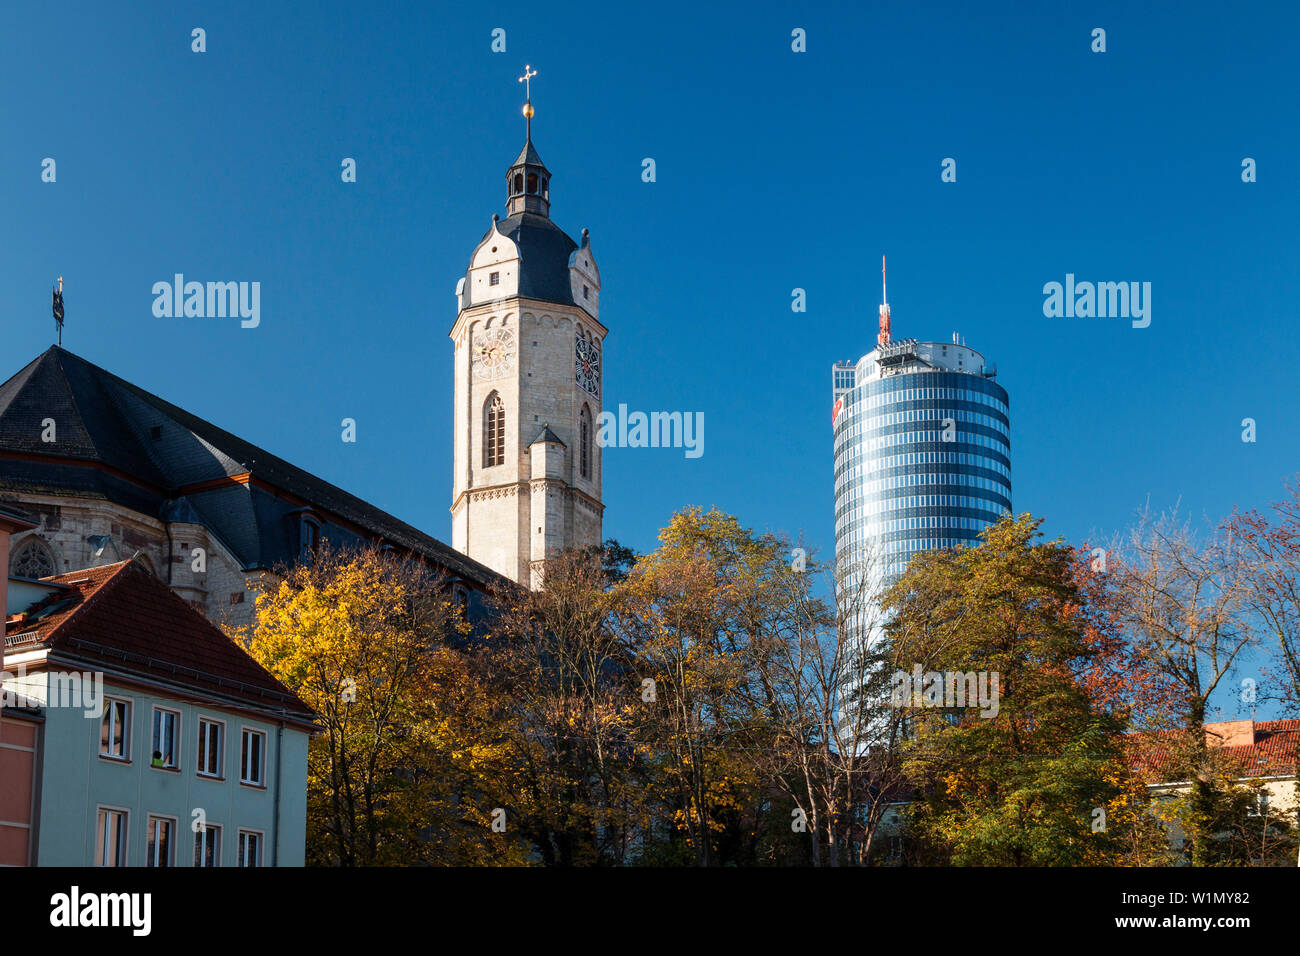 St. Michael Church and Jentower, Kirchplatz, Jena city, Thuringia, Germany, Europe Stock Photo